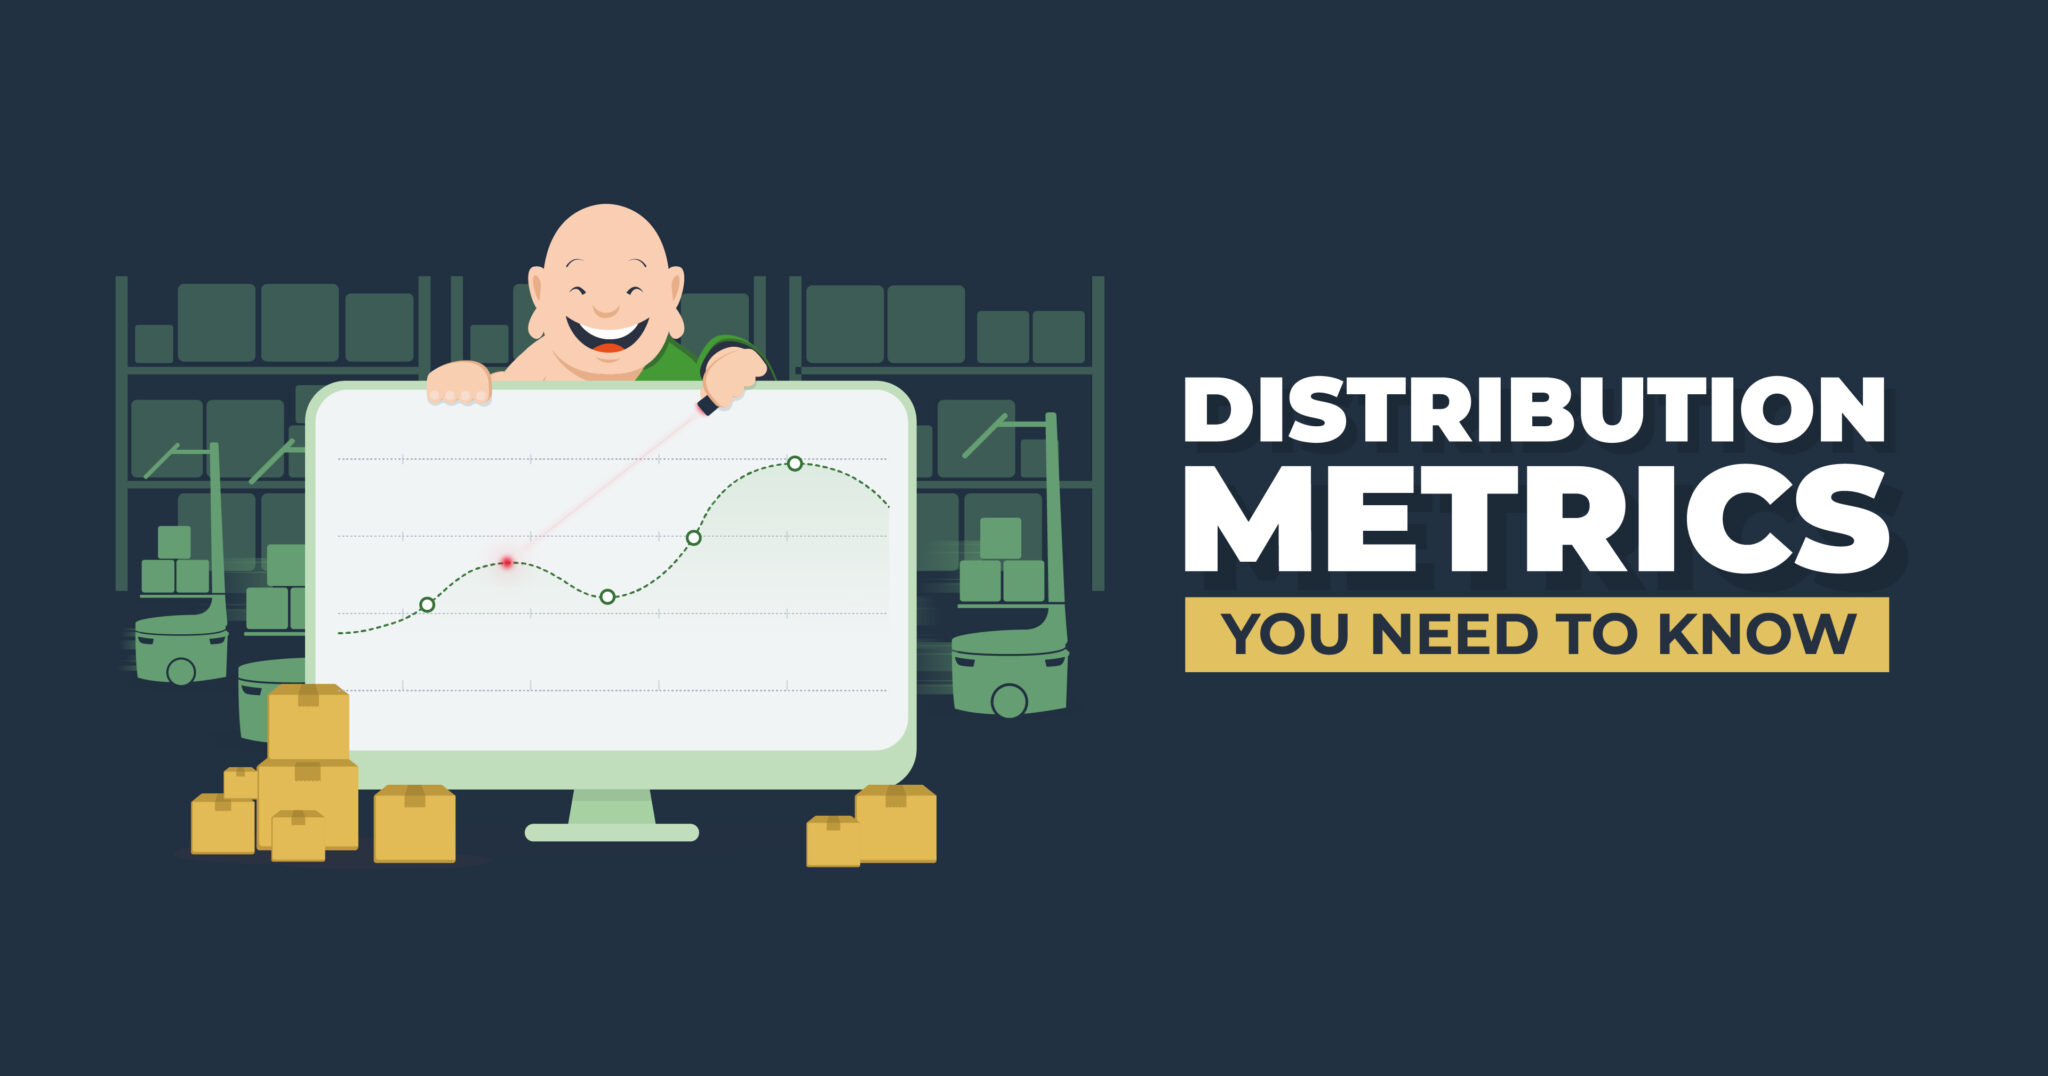 Distribution Metrics You Need to Know